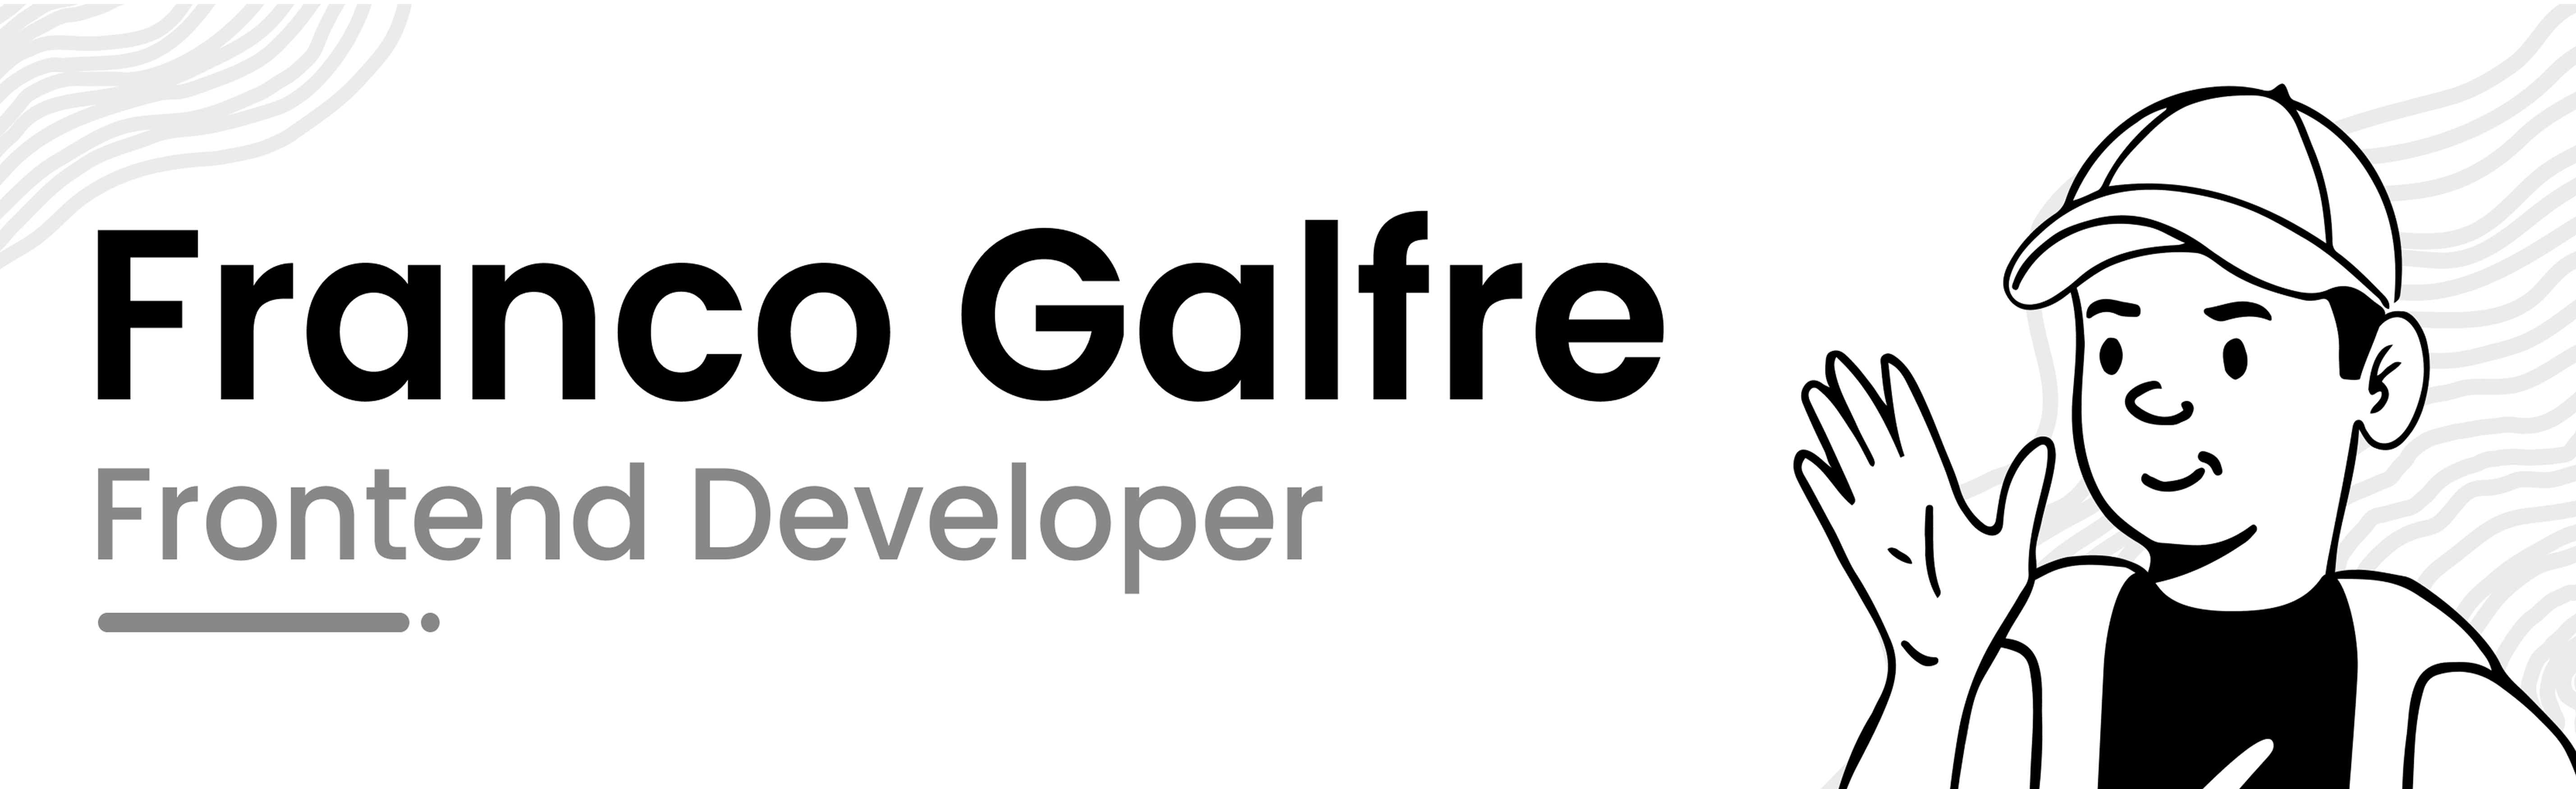 banner that says Franco Galfre - Frontend Developer